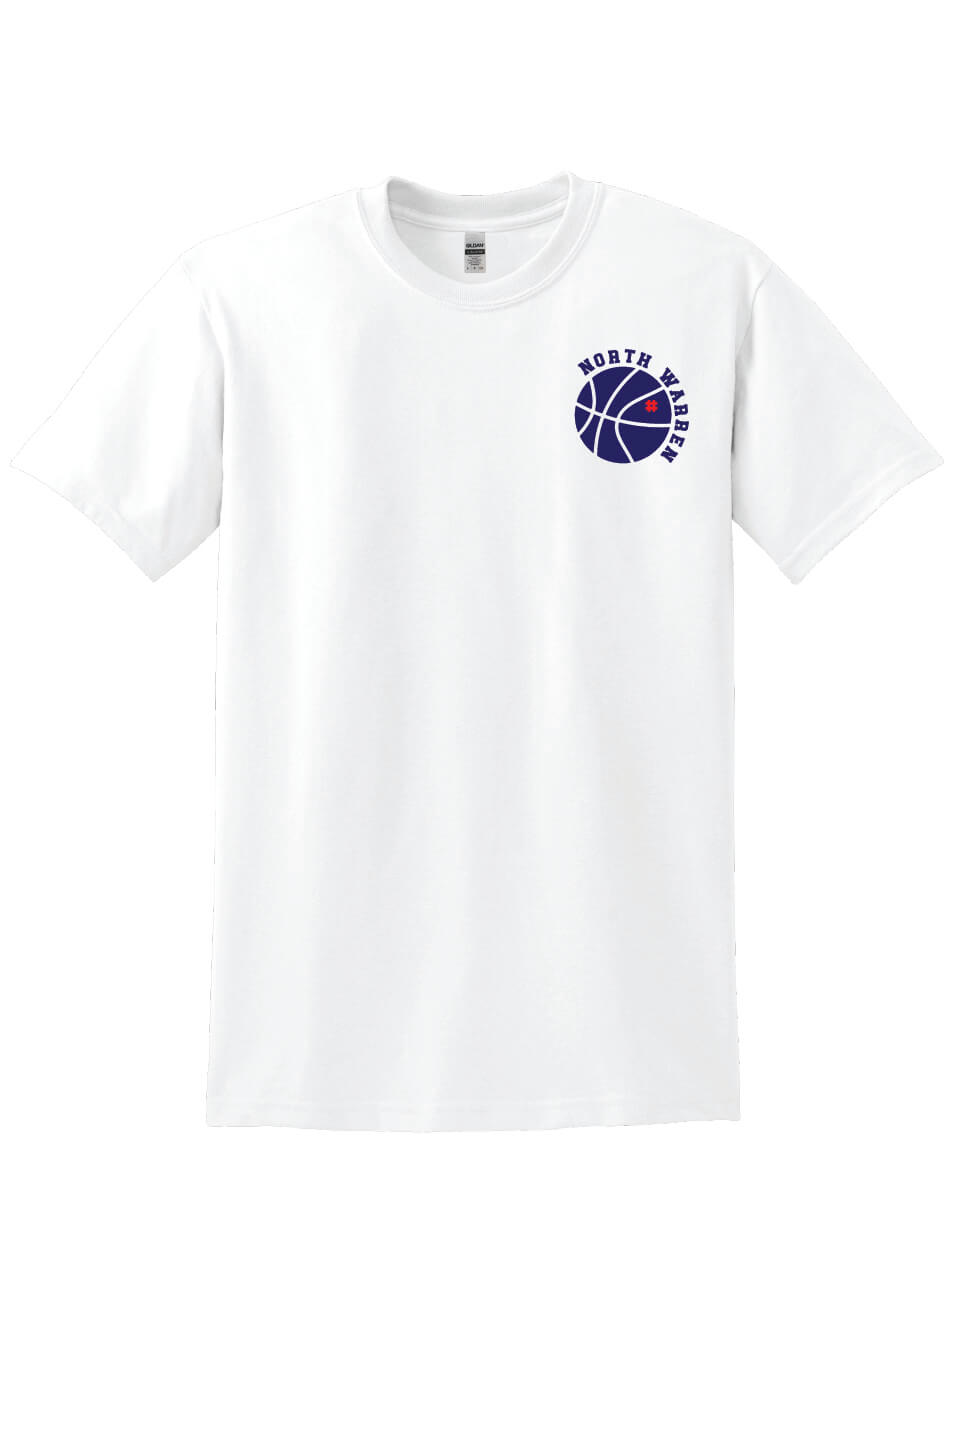 North Warren  Basketball Short Sleeve T-Shirt (Youth)